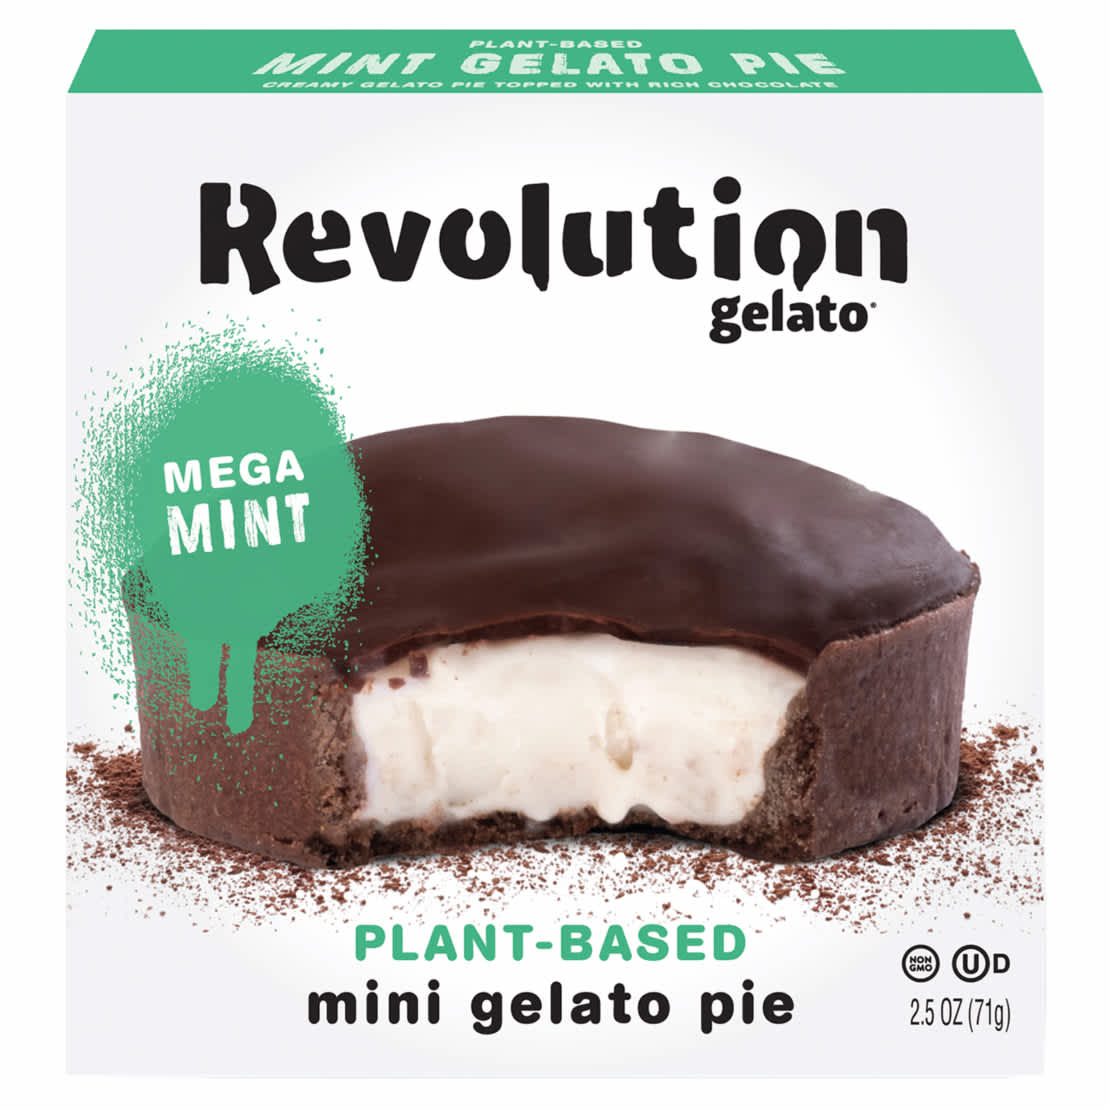 Revolution gelato mega mint